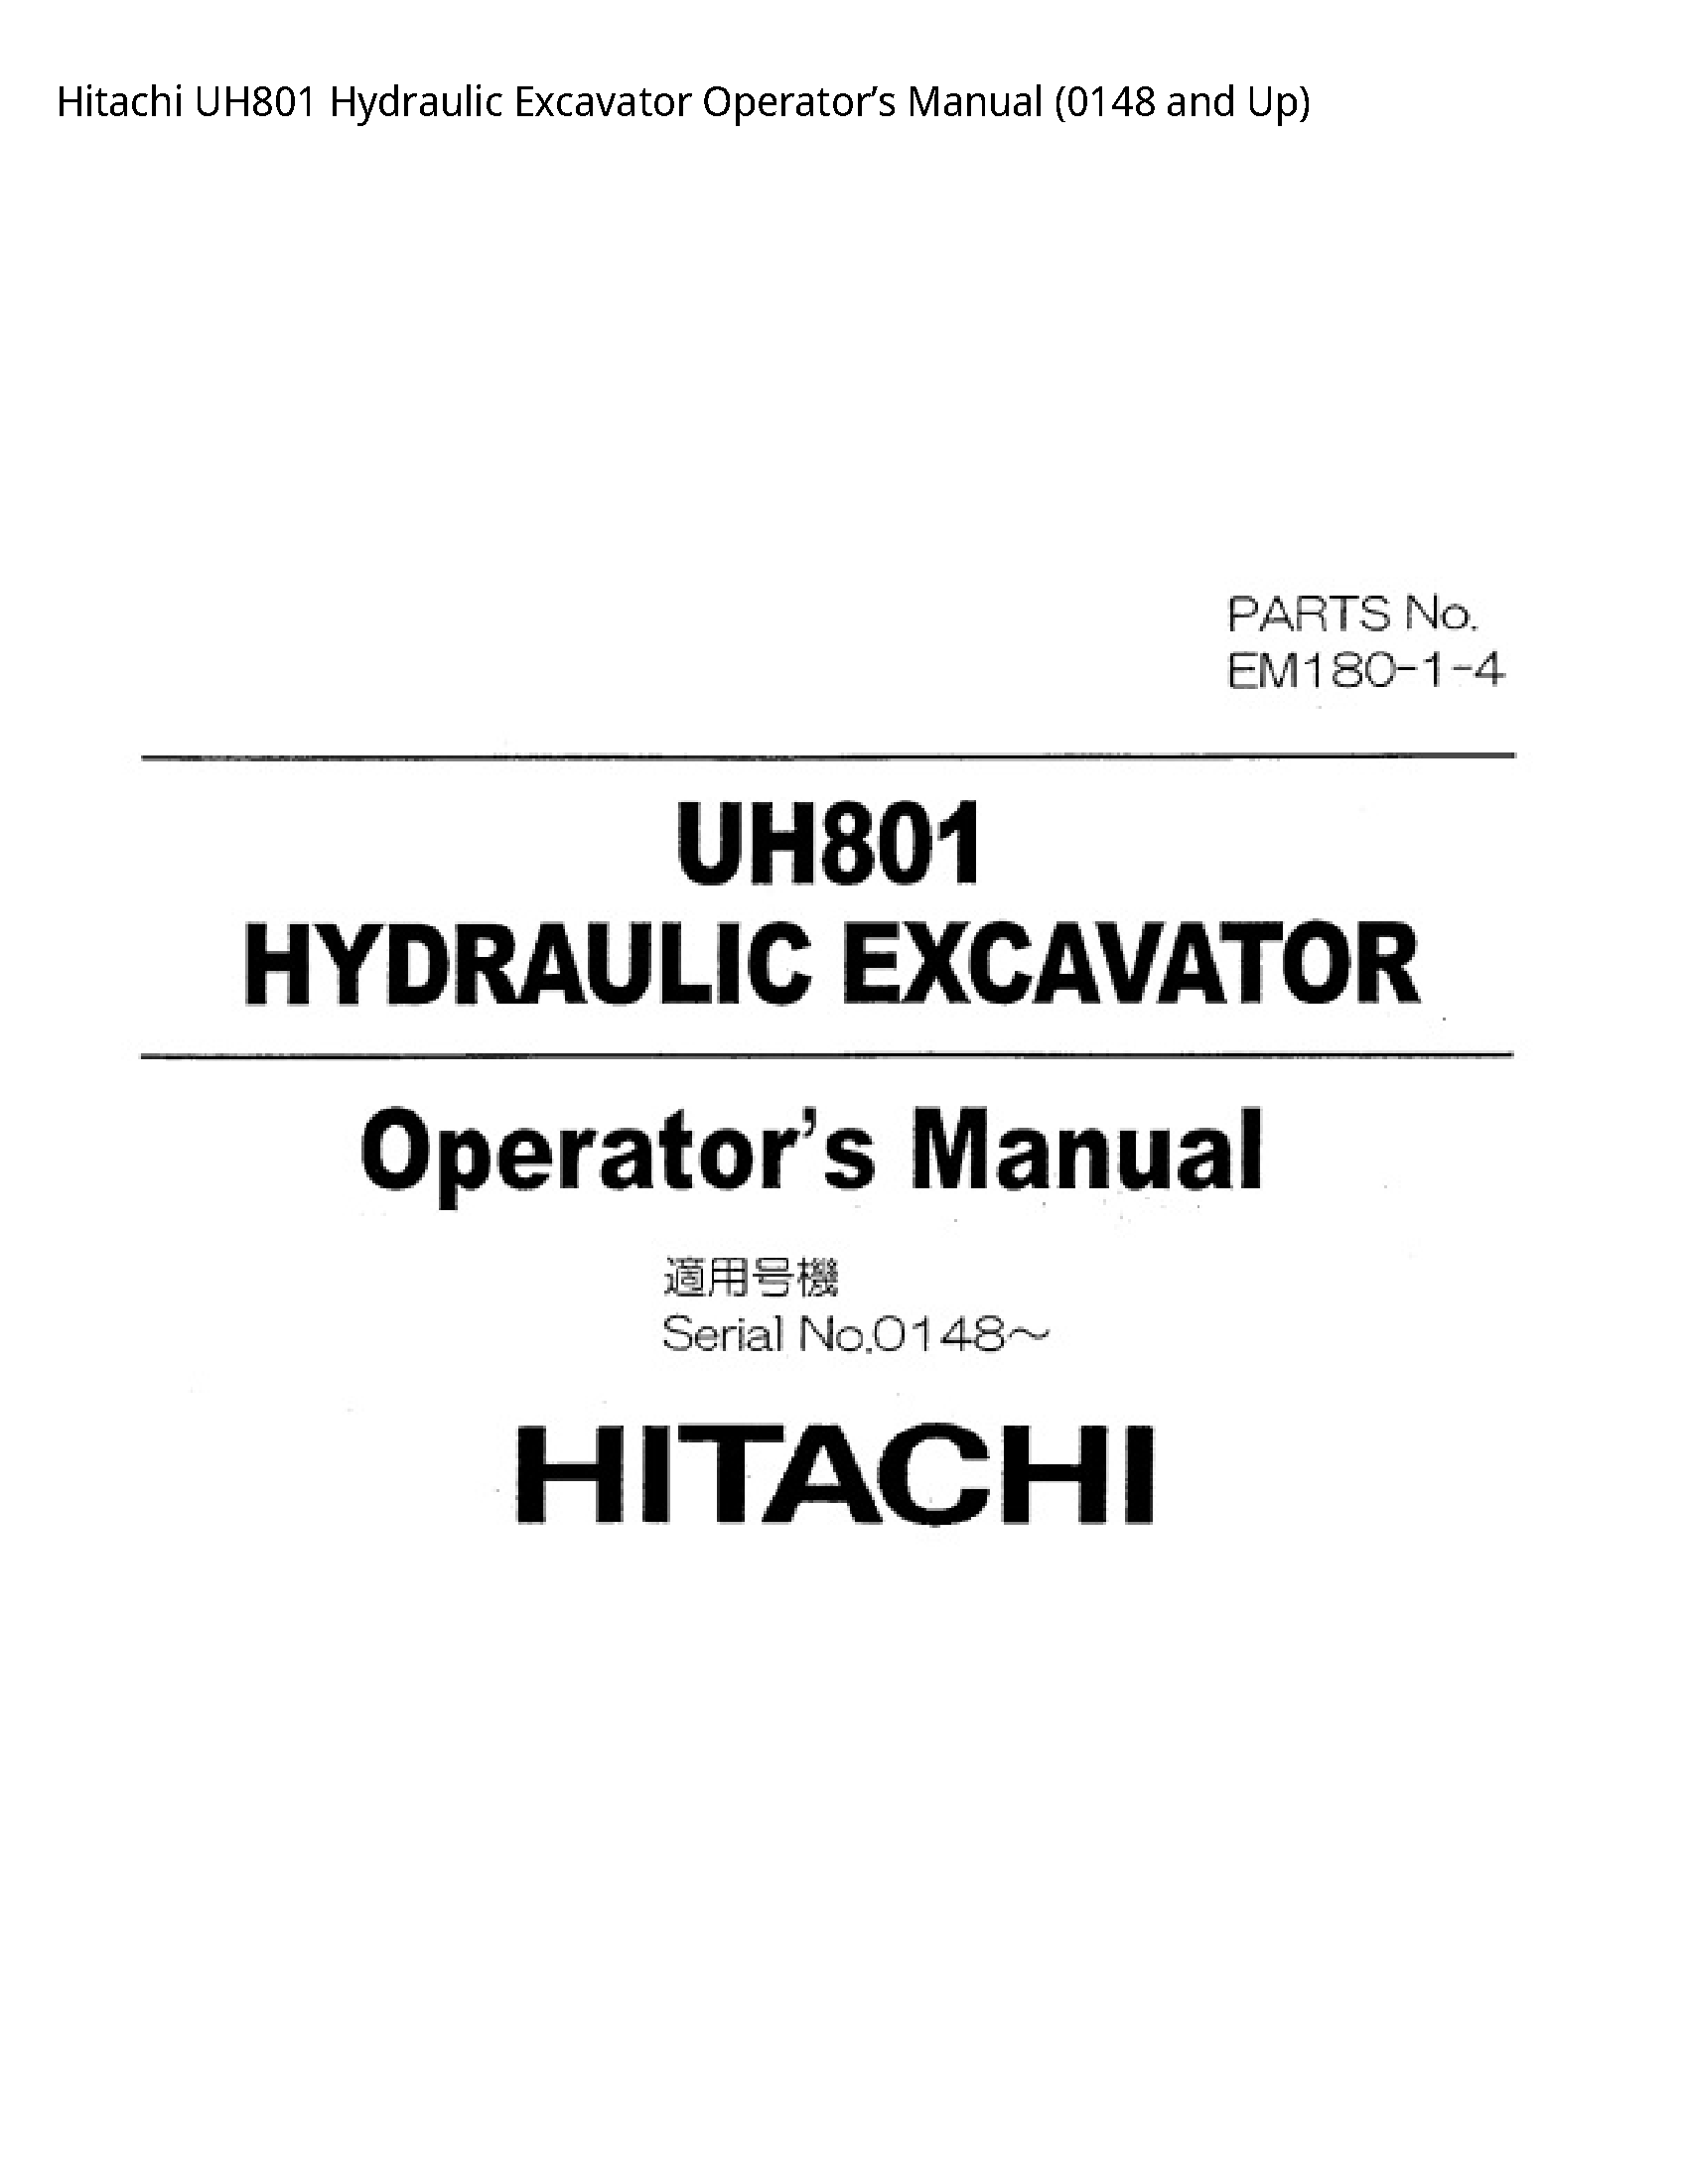 Hitachi UH801 Hydraulic Excavator Operator’s manual